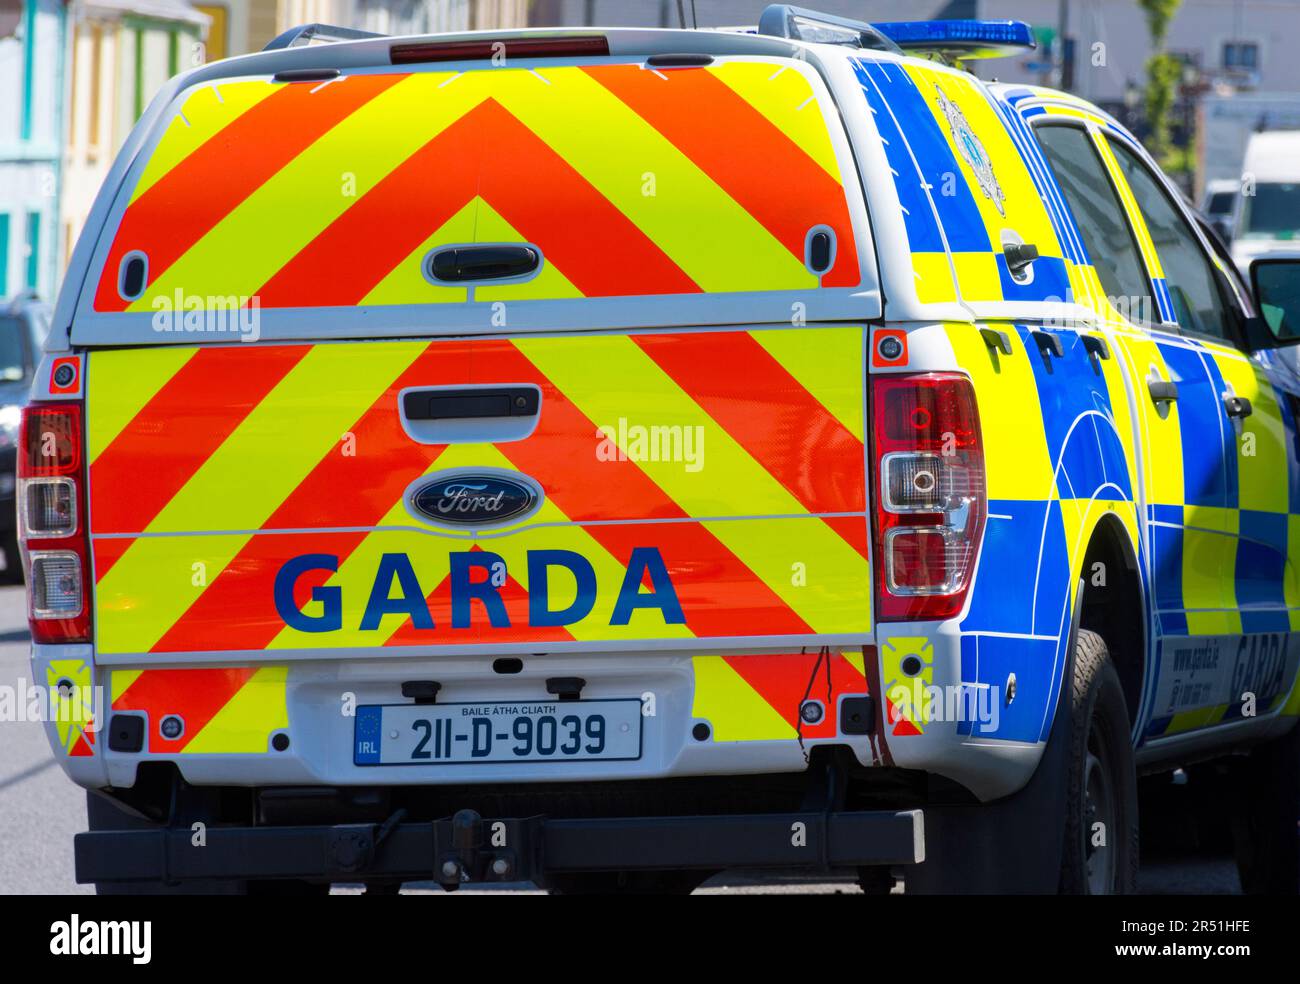 An Garda Síochána, Ireland National Police Service, truck or van in rural Irish village, County Donegal, Ireland Stock Photo